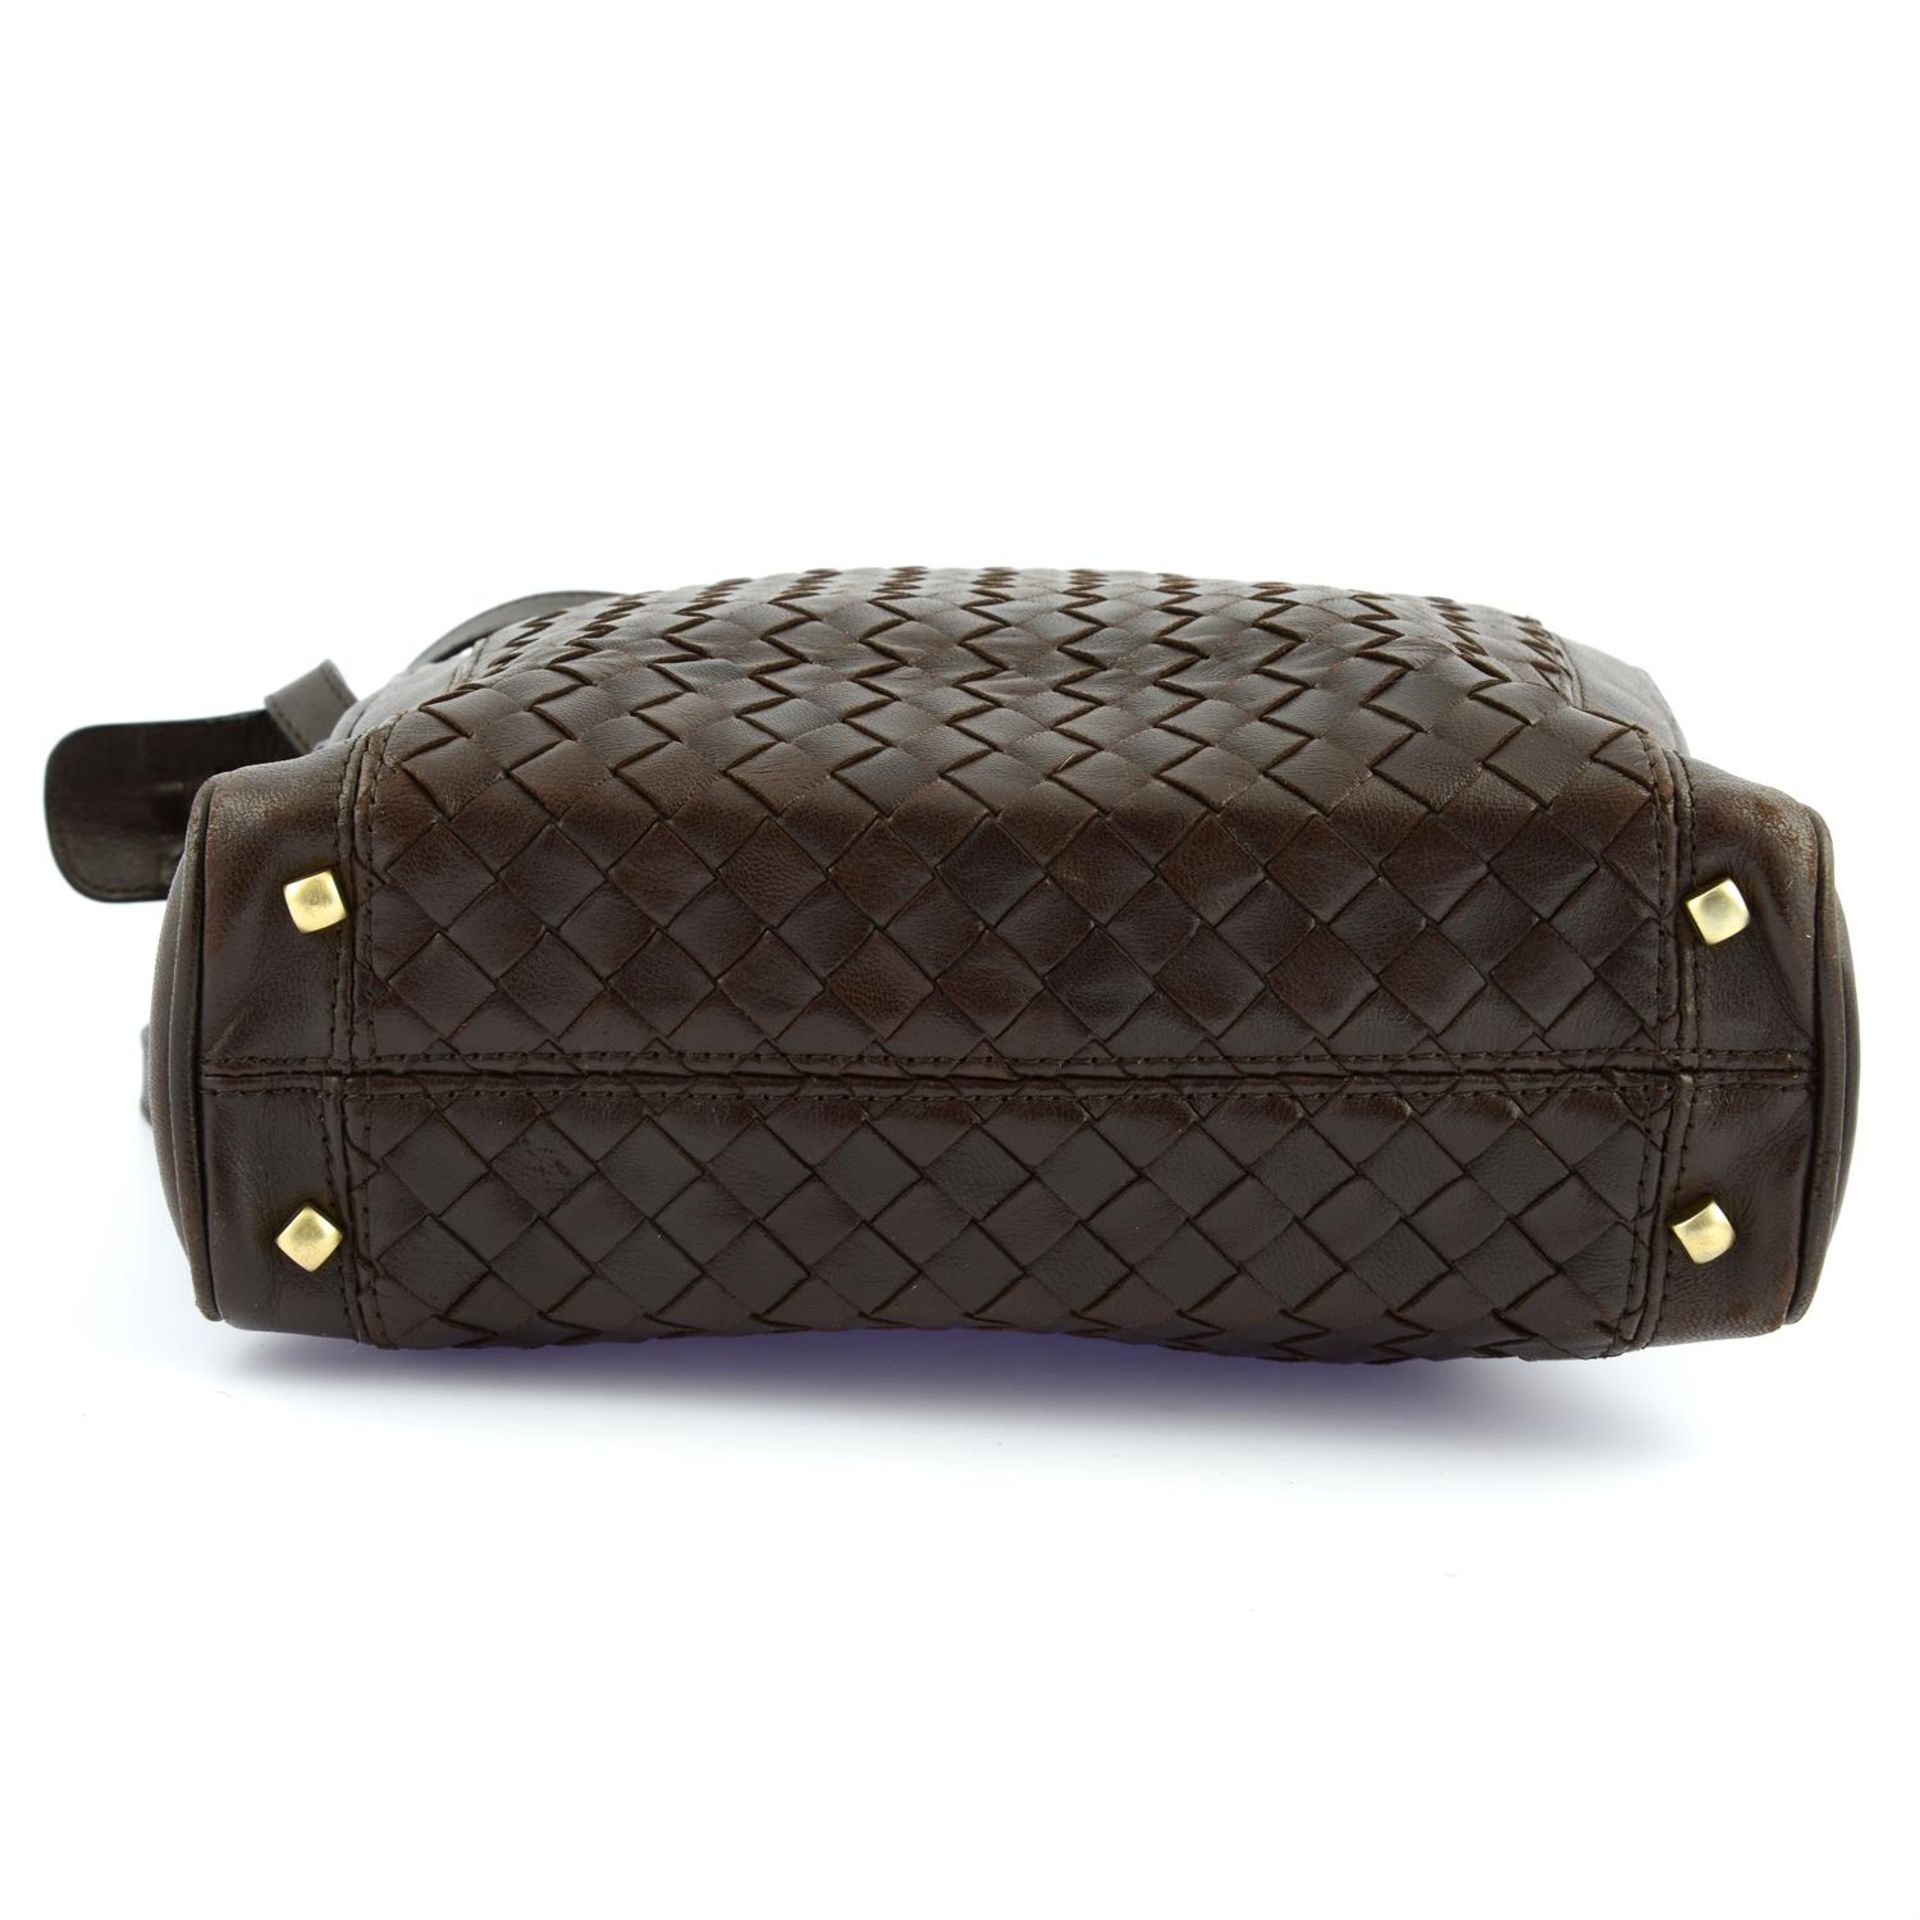 BOTTEGA VENETA - a brown leather crossbody handbag. - Image 4 of 4